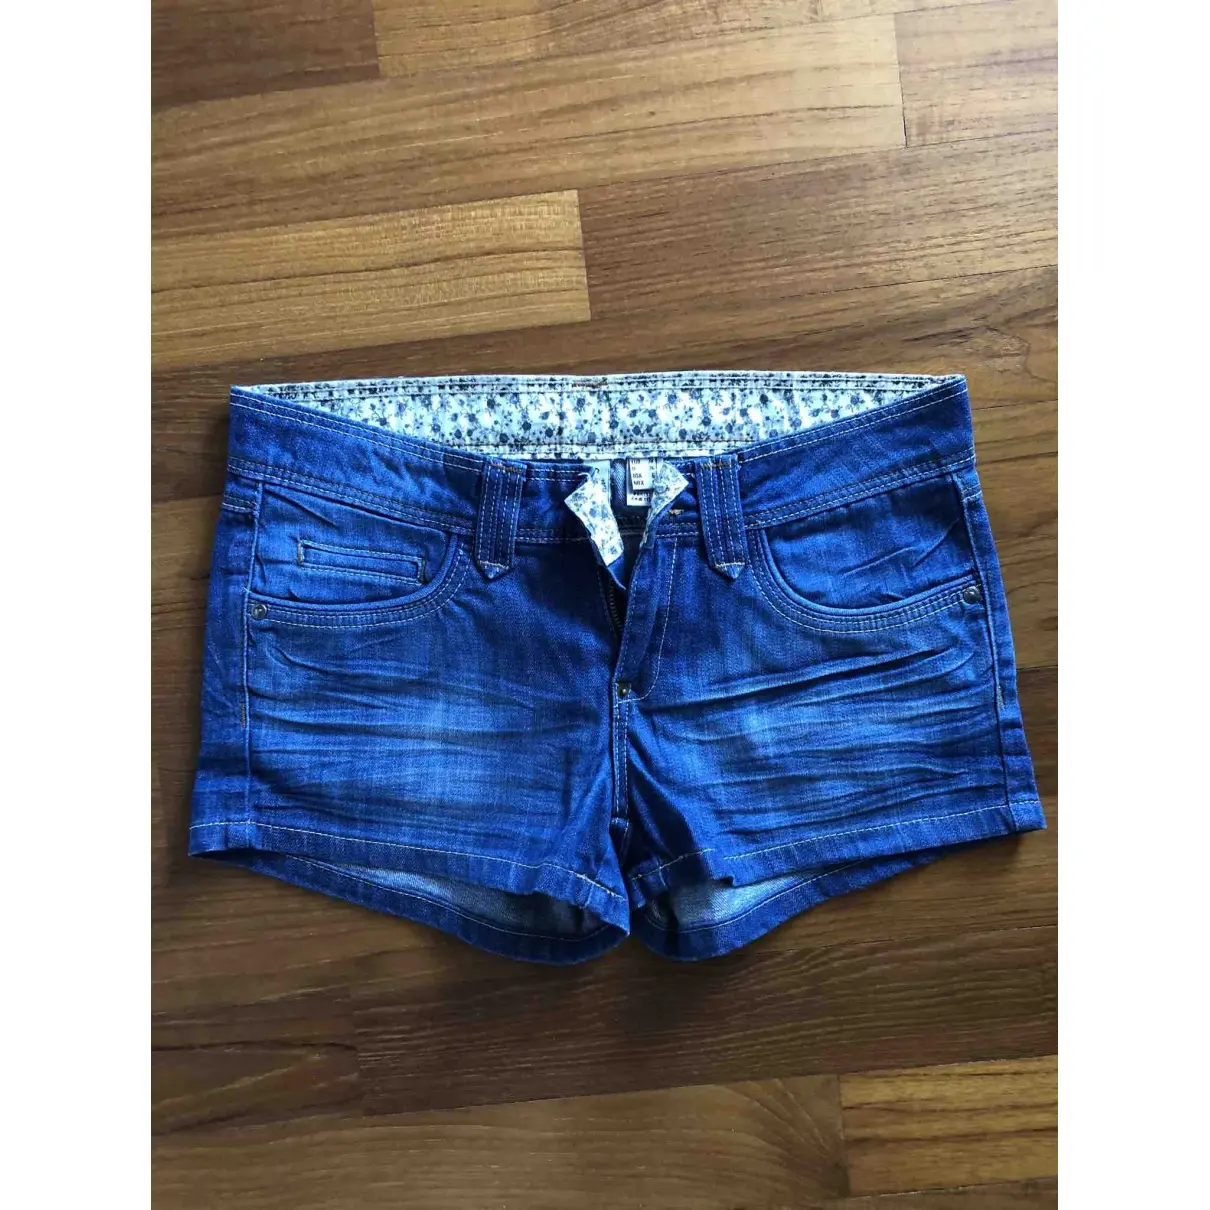 Buy Mango Blue Cotton Shorts online